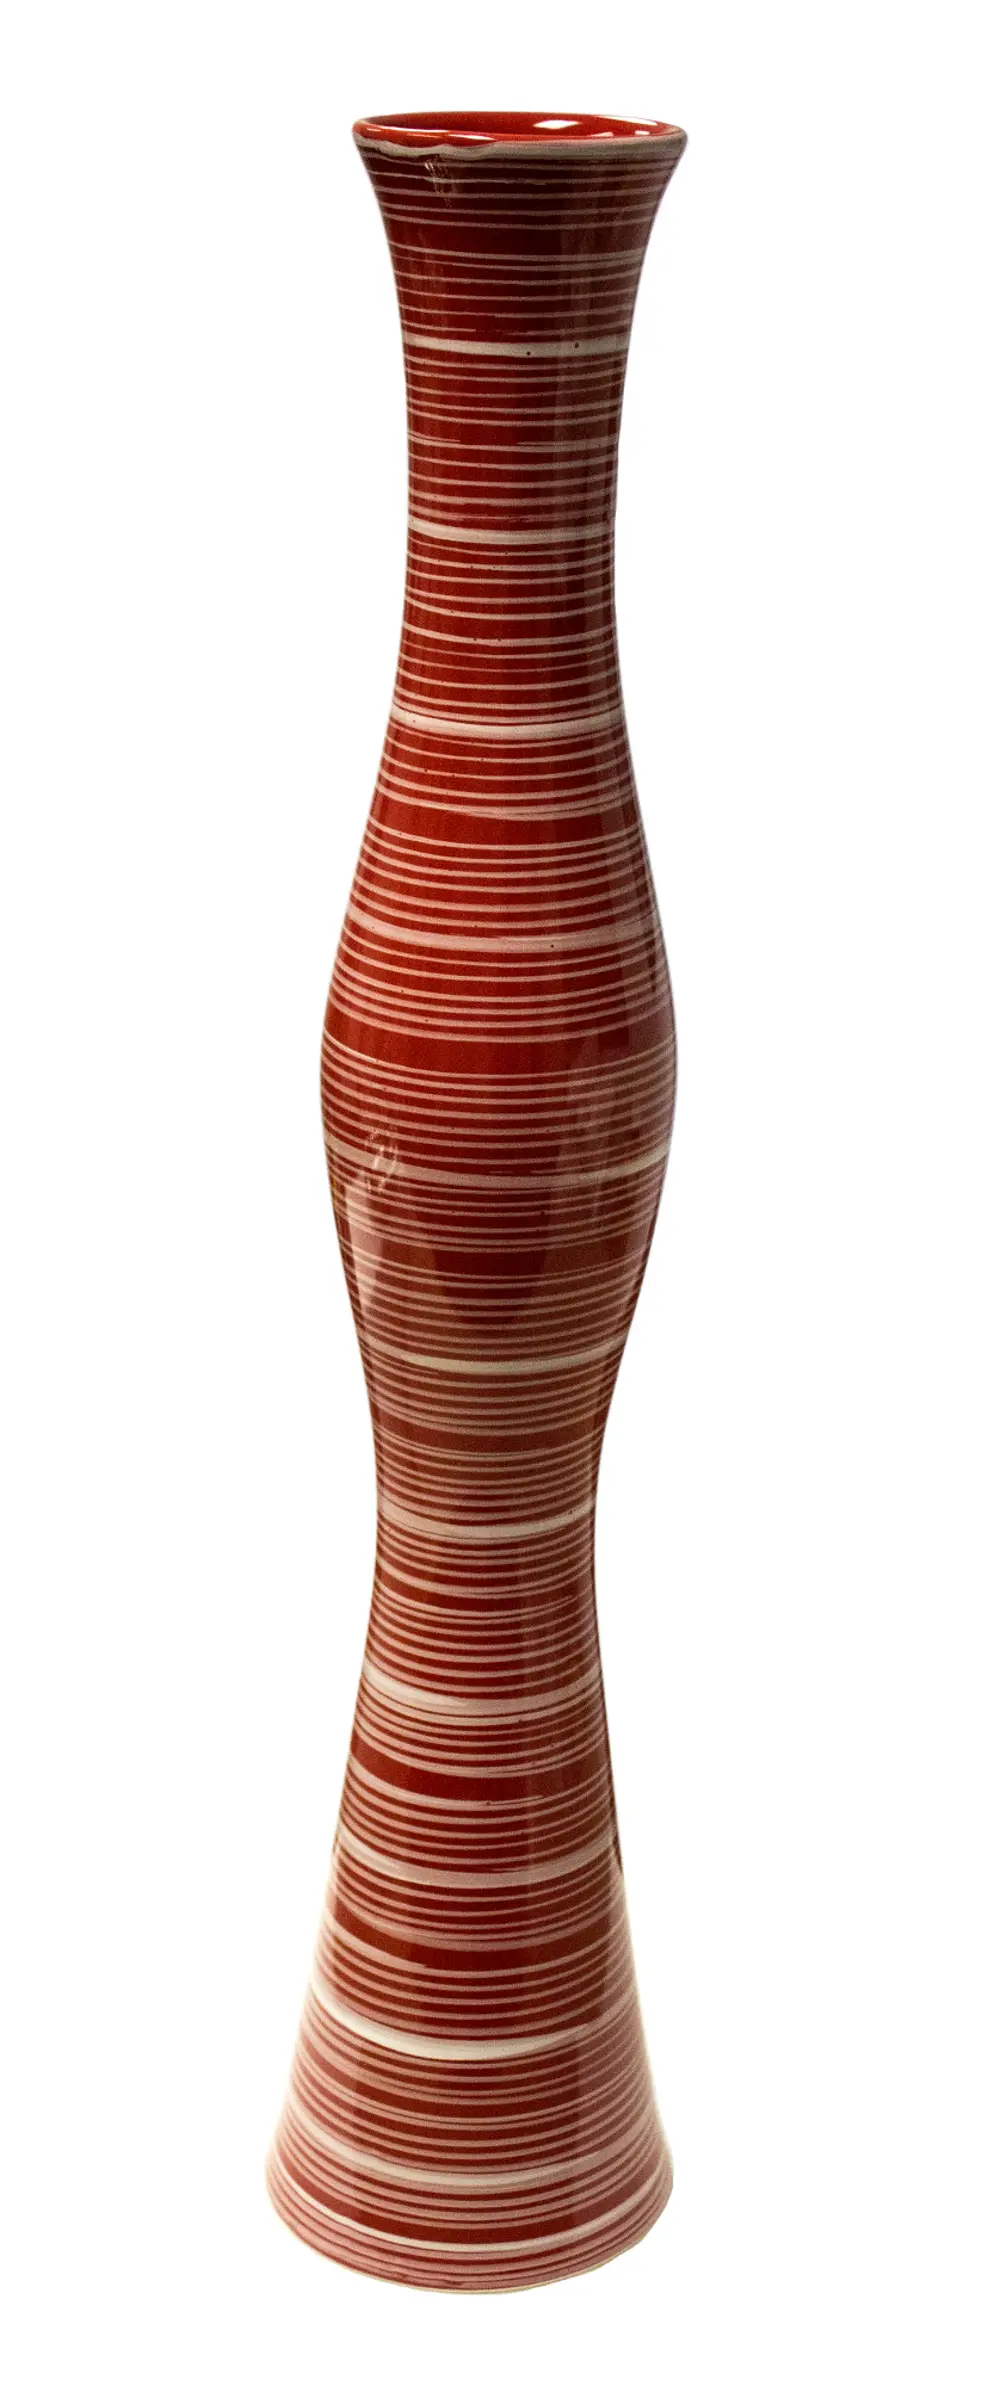 24 Inch Red & White Striped Cylinder Vase-1